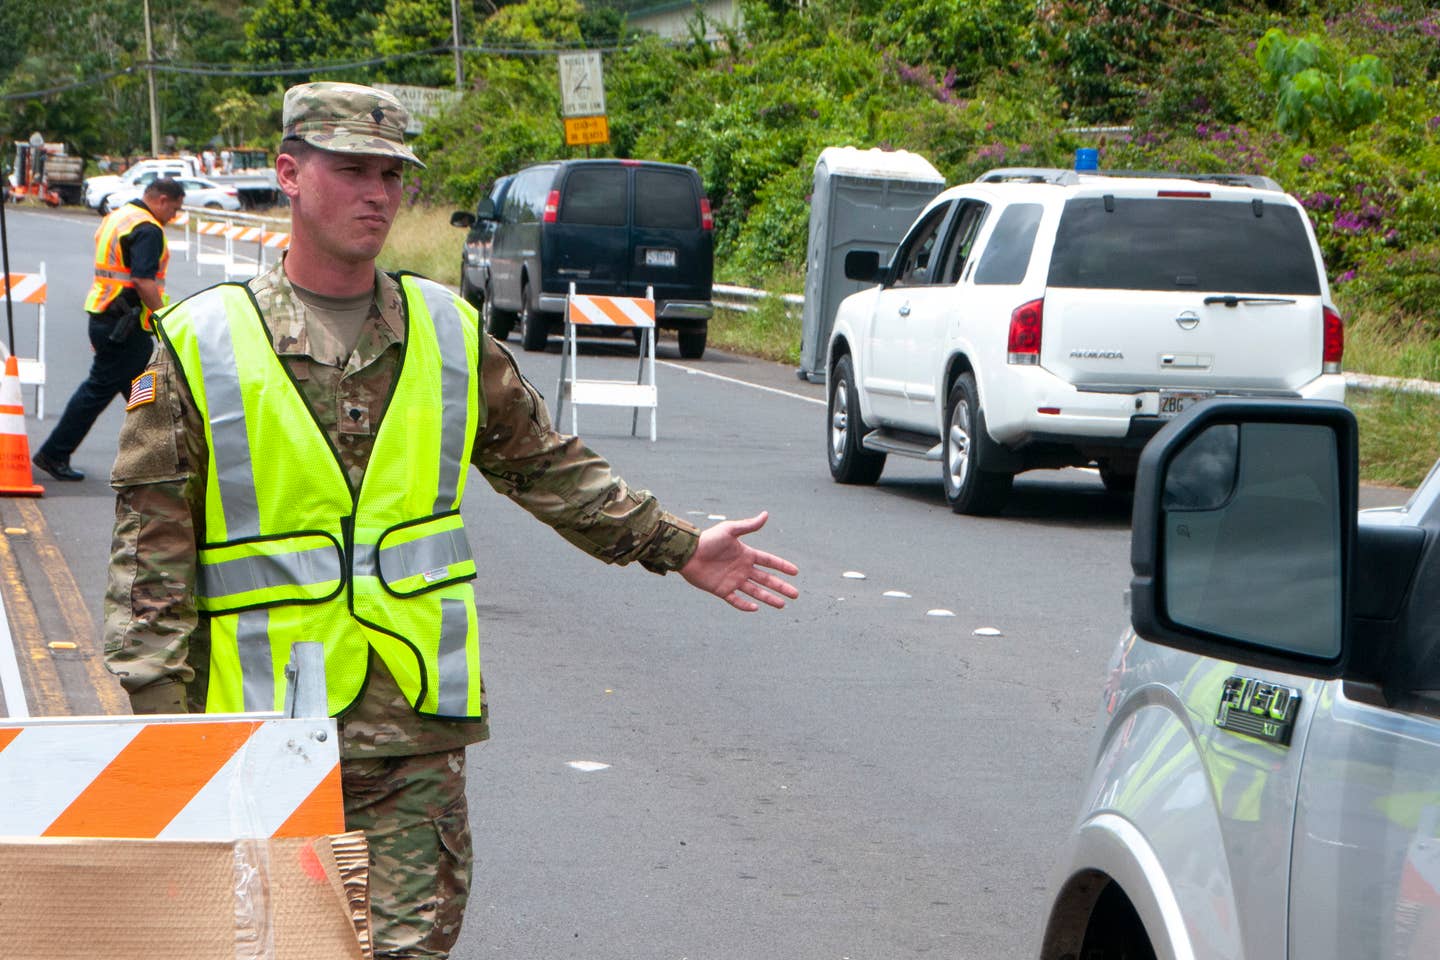 Spc. Donavan Wills, Bravo Co., 227th Brigade Engineer Battalion, directs traffic May 12, 2018 in response to the volcano eruption, at Leilani Estates, Pahoa, Hawaii.